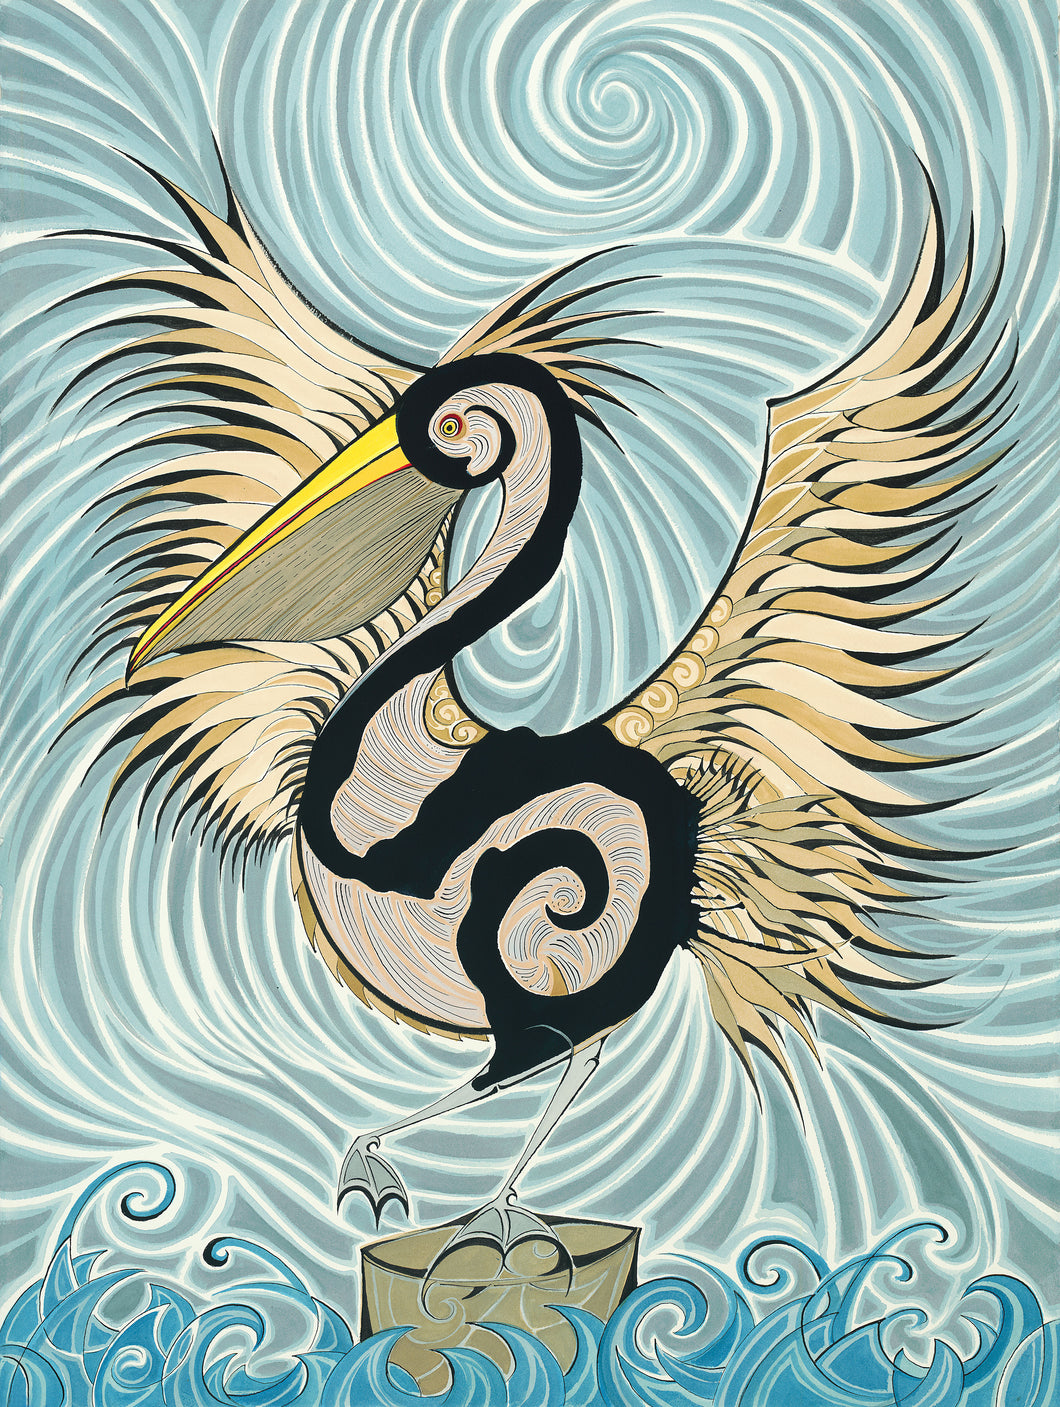 The River Pelican